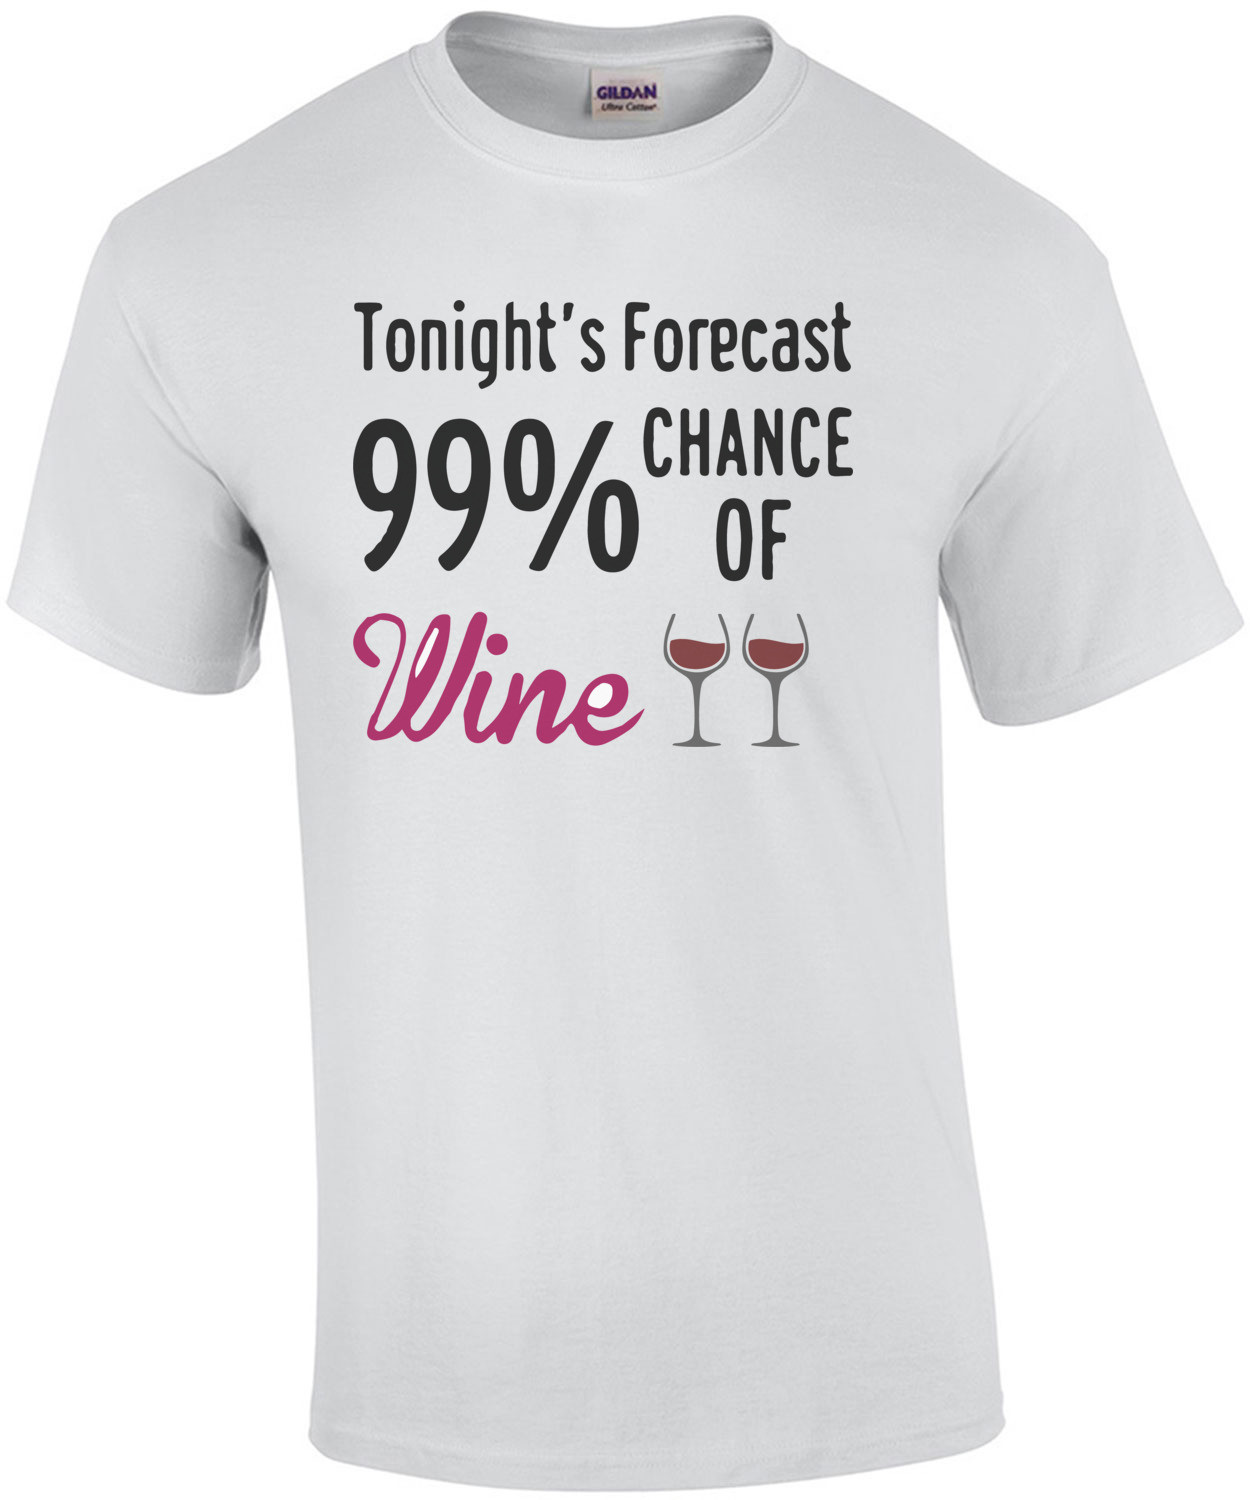 Tonight's Forecast 99% Chance of Wine.